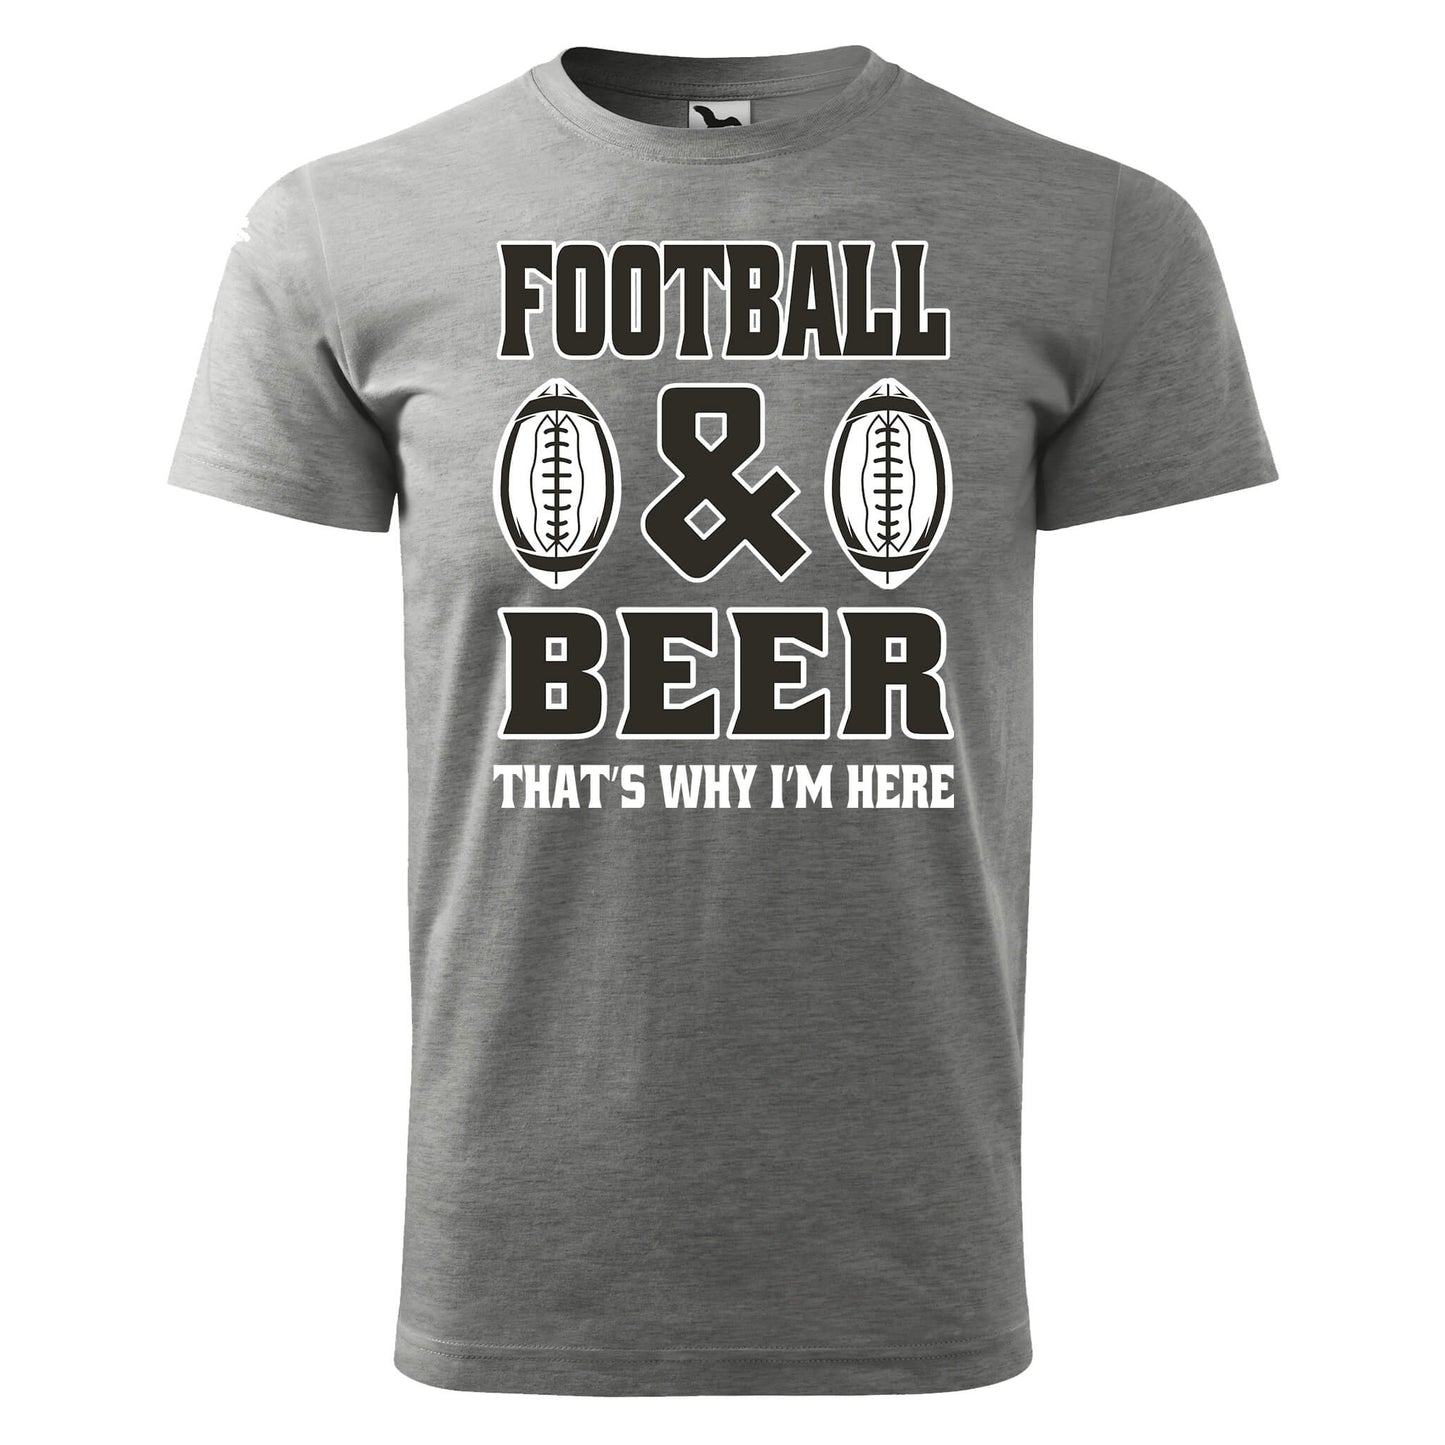 Football and beer t-shirt - rvdesignprint